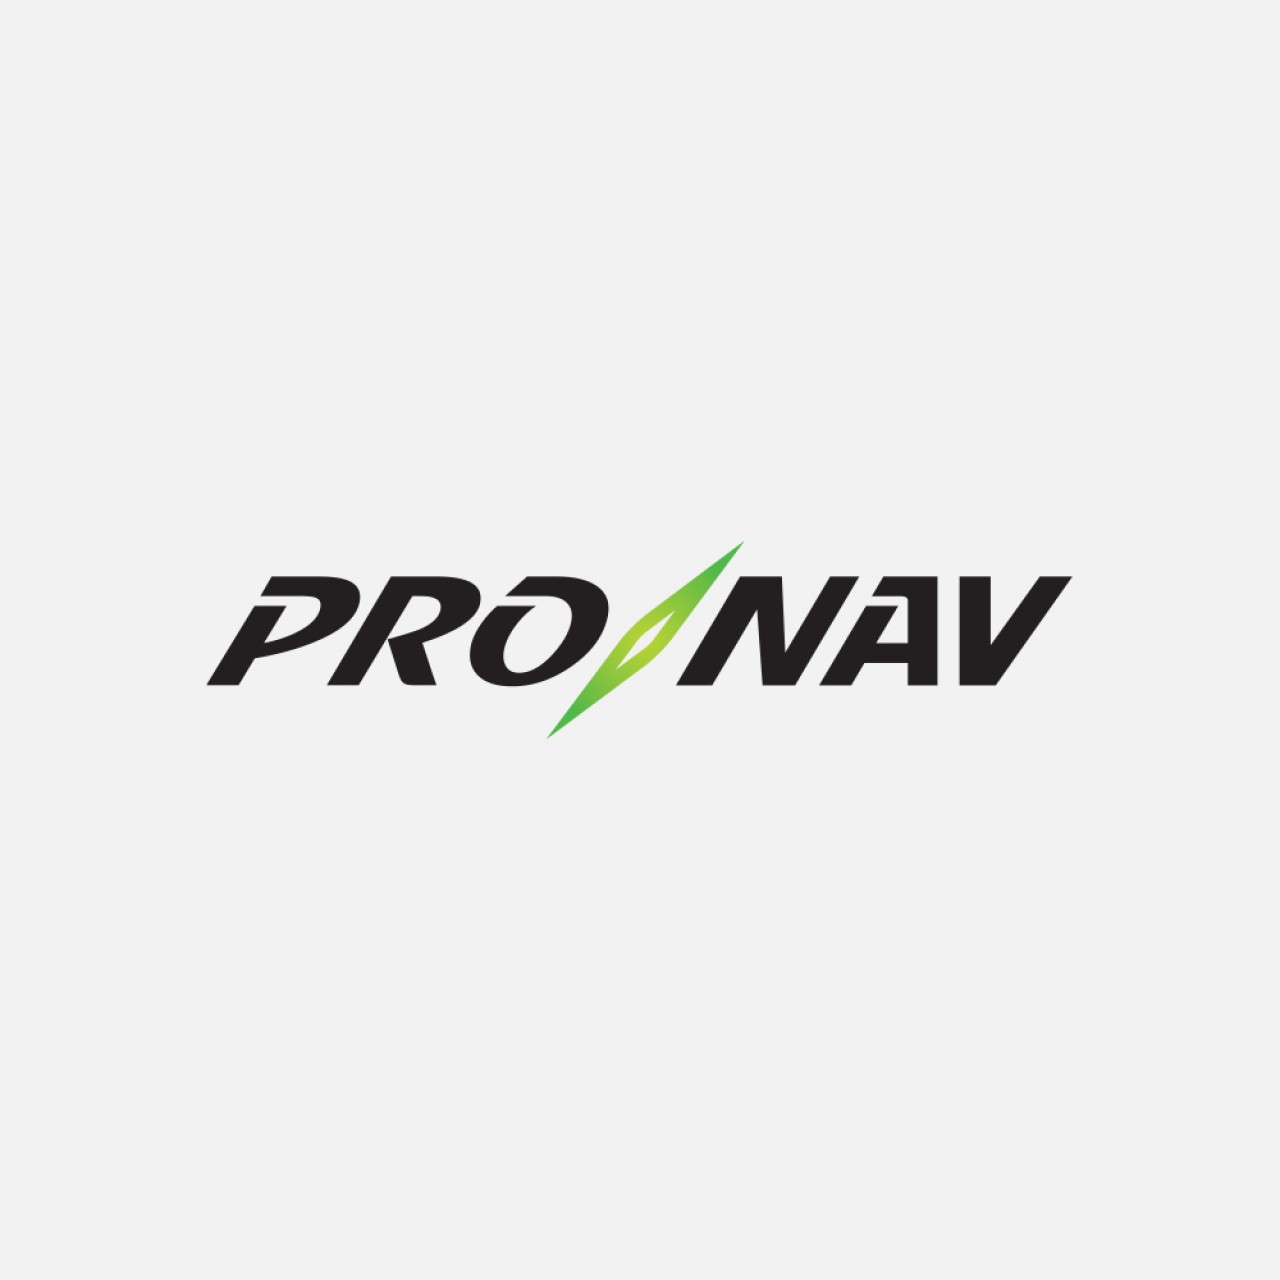 ProNav logo